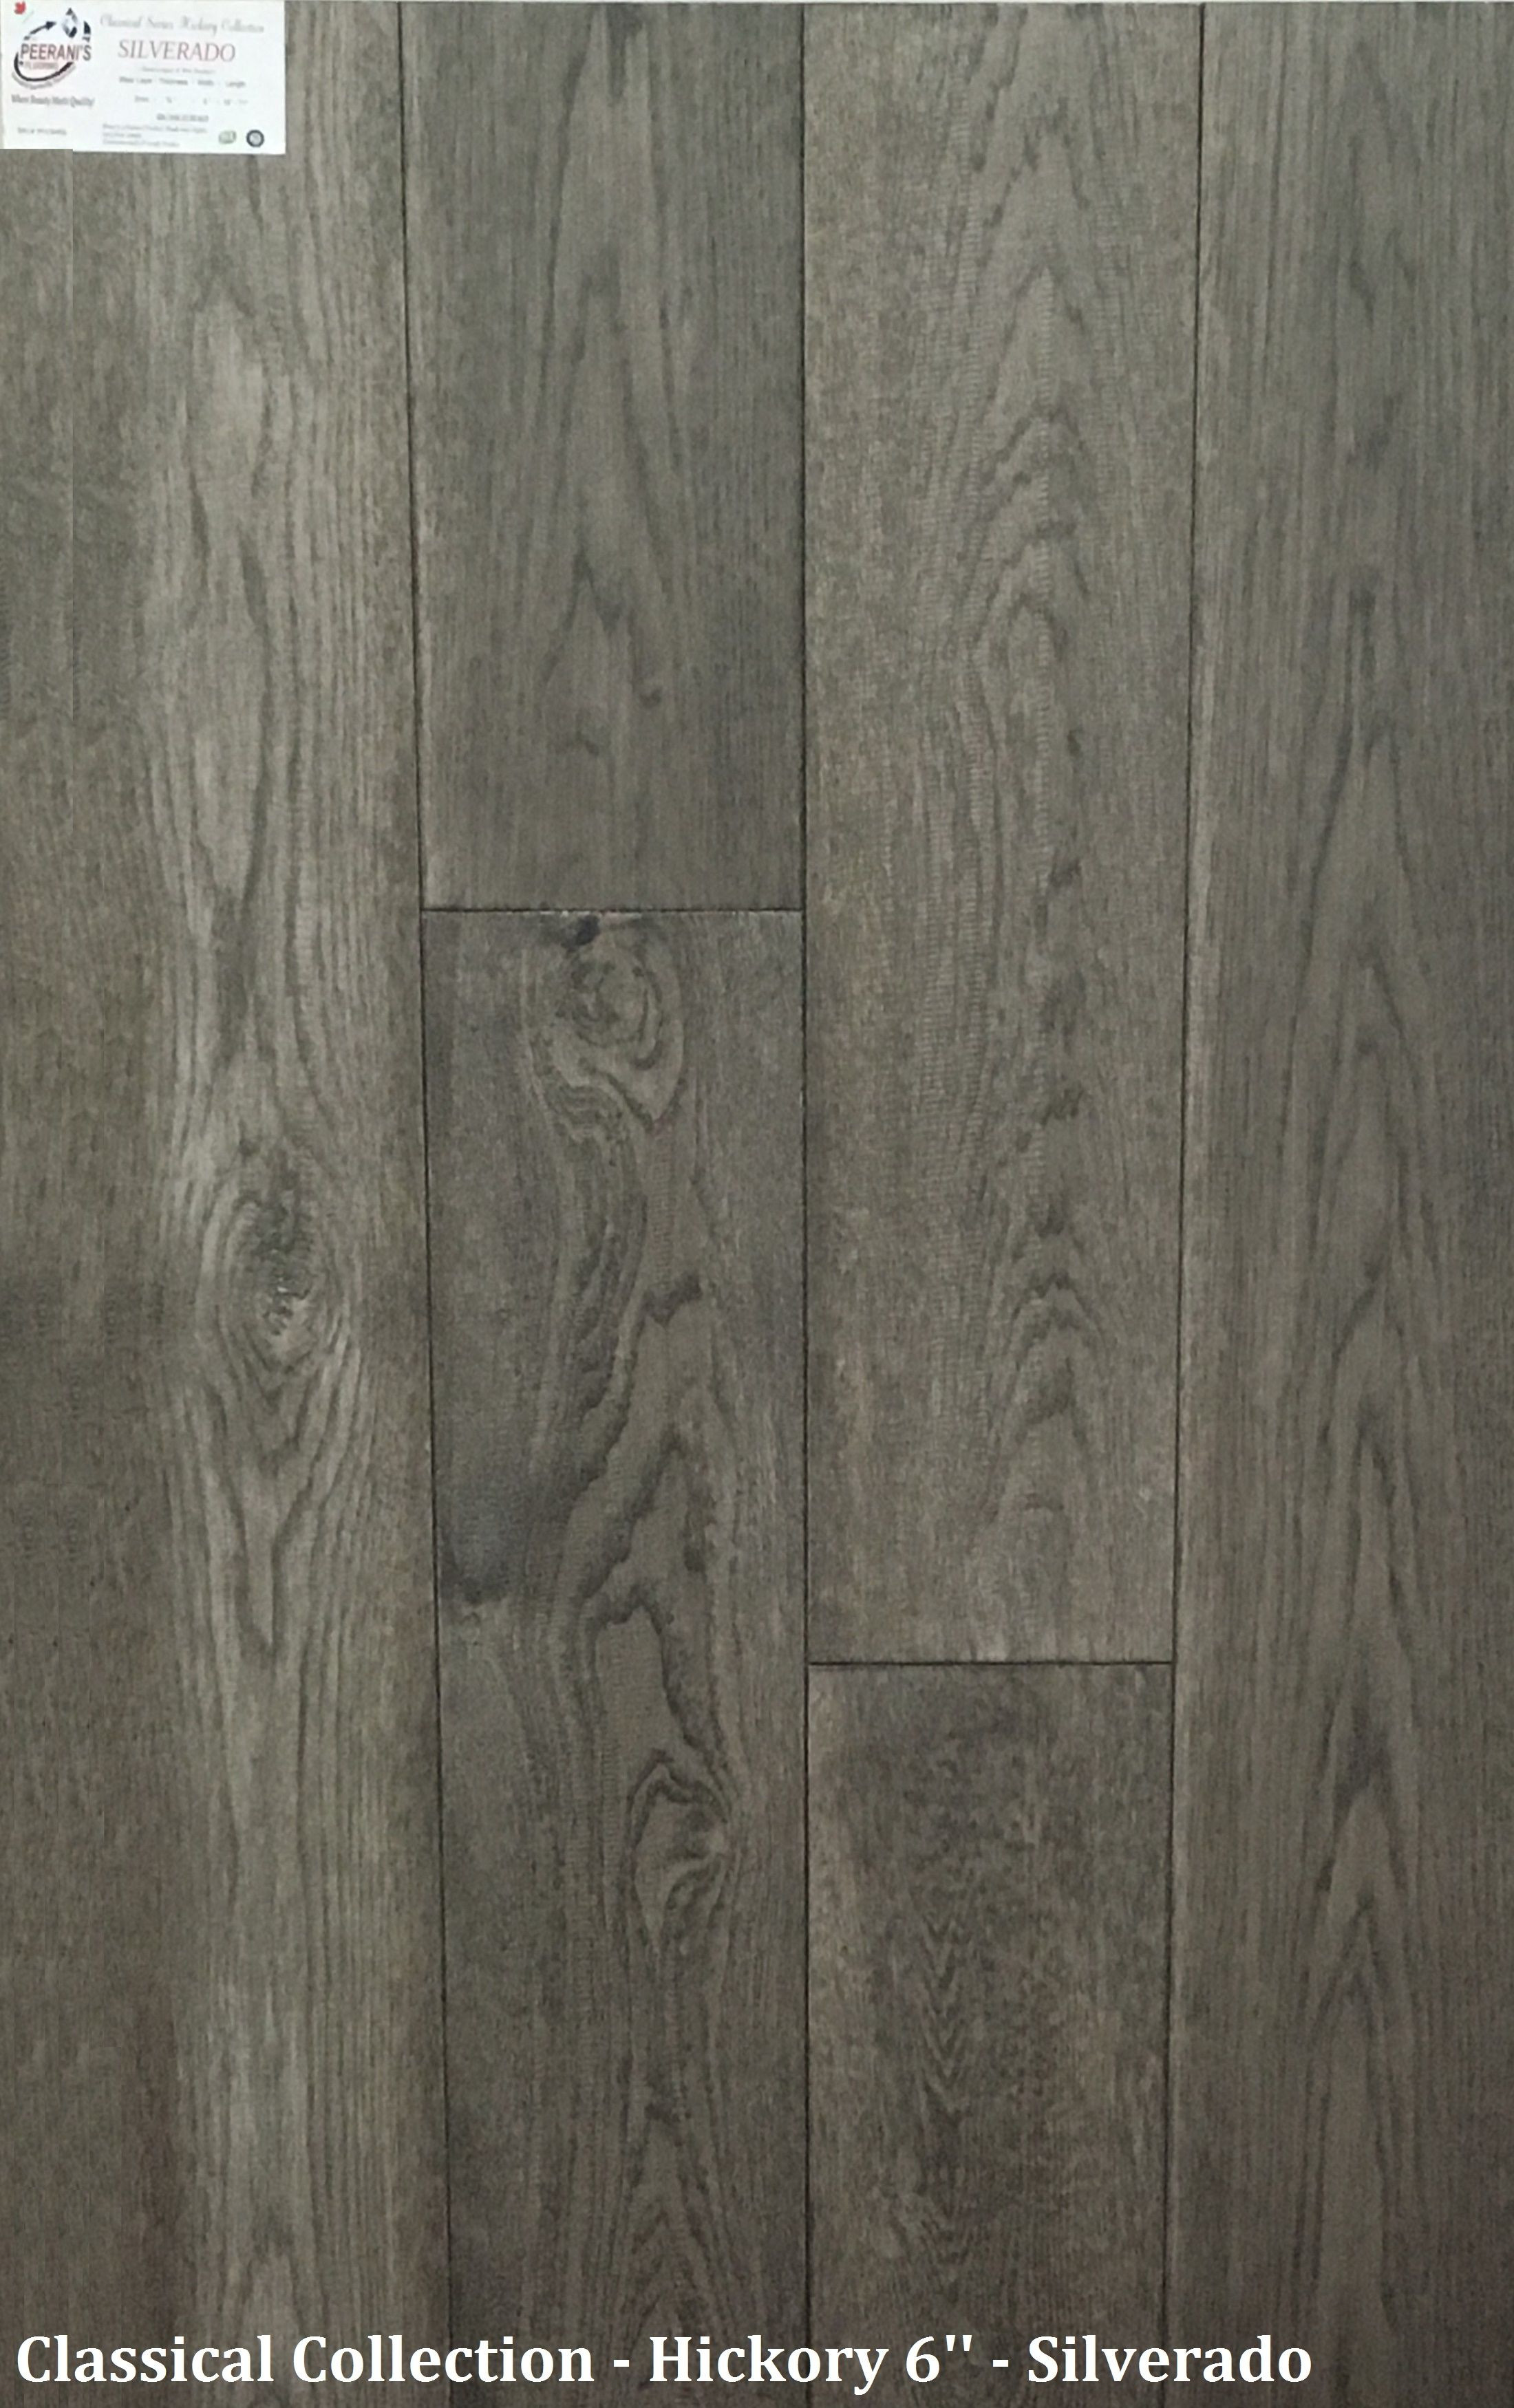 30 Spectacular Grey Hickory Hardwood Flooring 2022 free download grey hickory hardwood flooring of pin by peeranis flooring on peeranis classical series engineered with engineered hardwood engineering technology